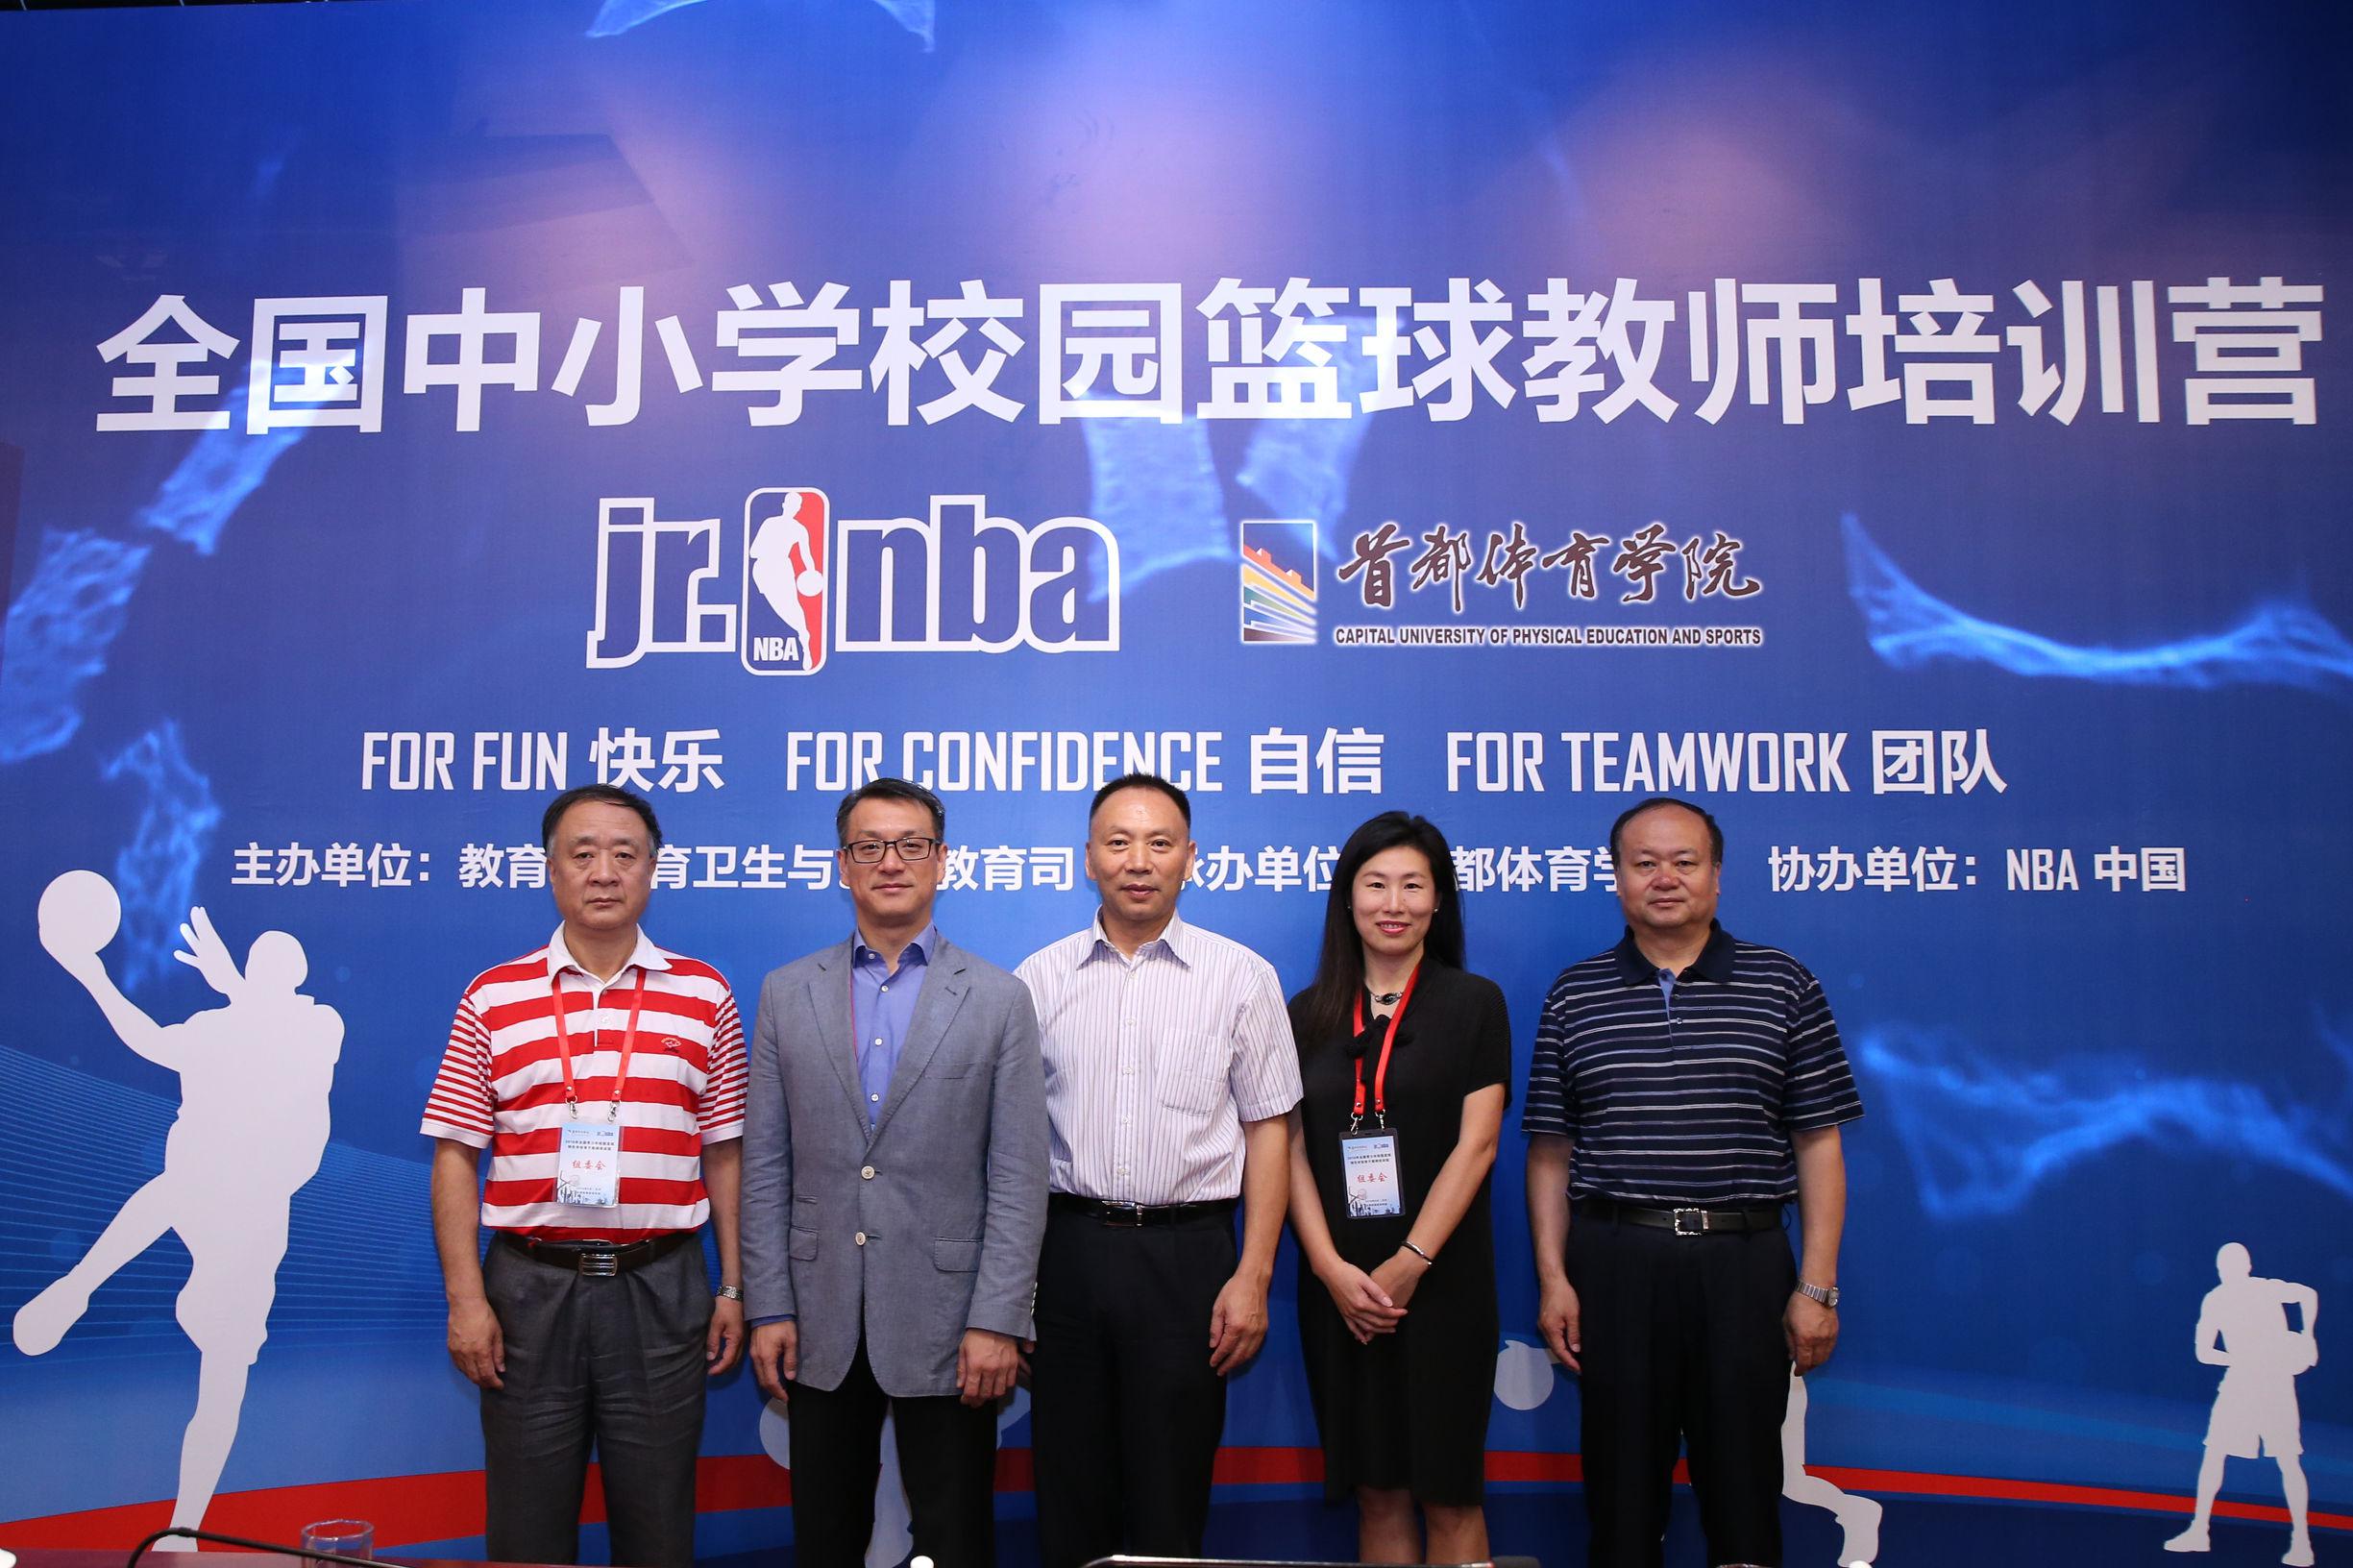 jr. nba 体育老师培训 NBA中国正式开启全国中小学体育老师培训项目(1)